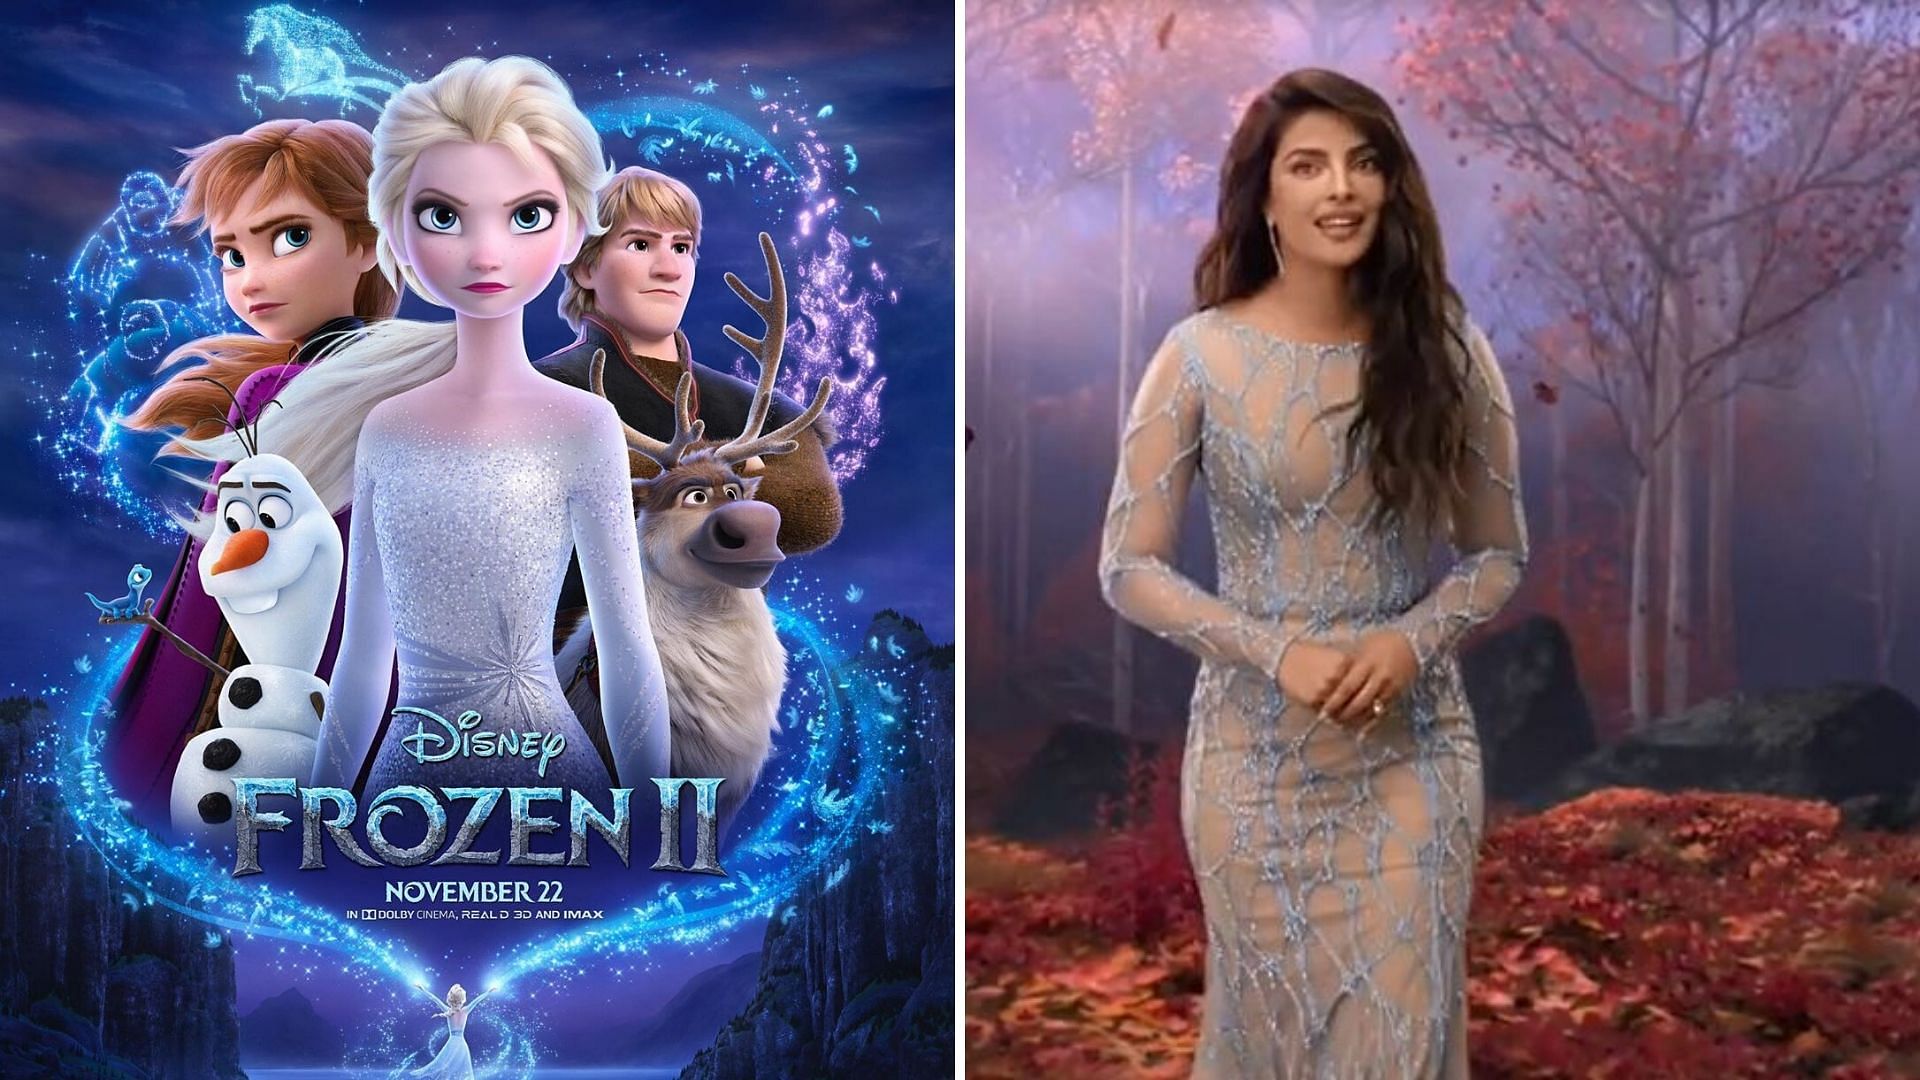 Priyanka Chopra and Parineeti Chopra will be voicing the characters of Disney’s <i>Frozen 2. </i>